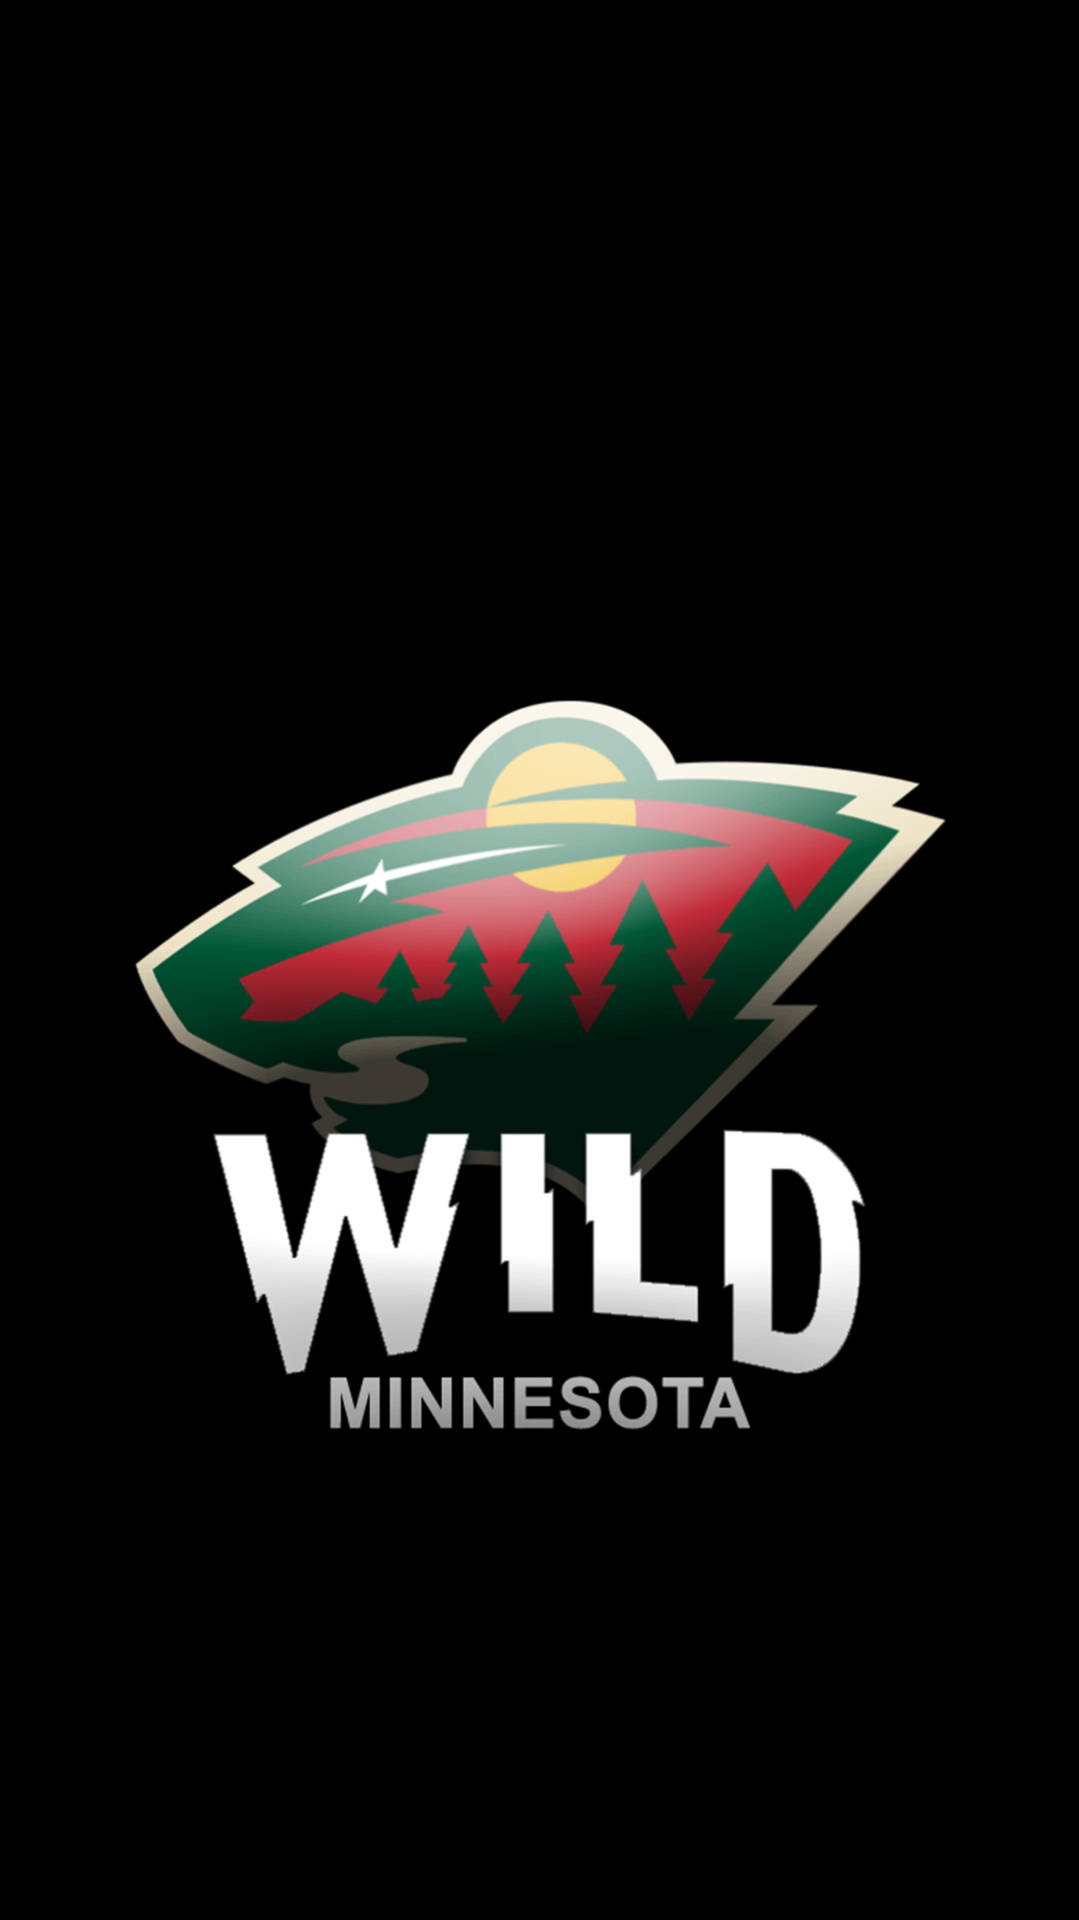 Top 999+ Minnesota Wild Wallpaper Full HD, 4K✅Free to Use